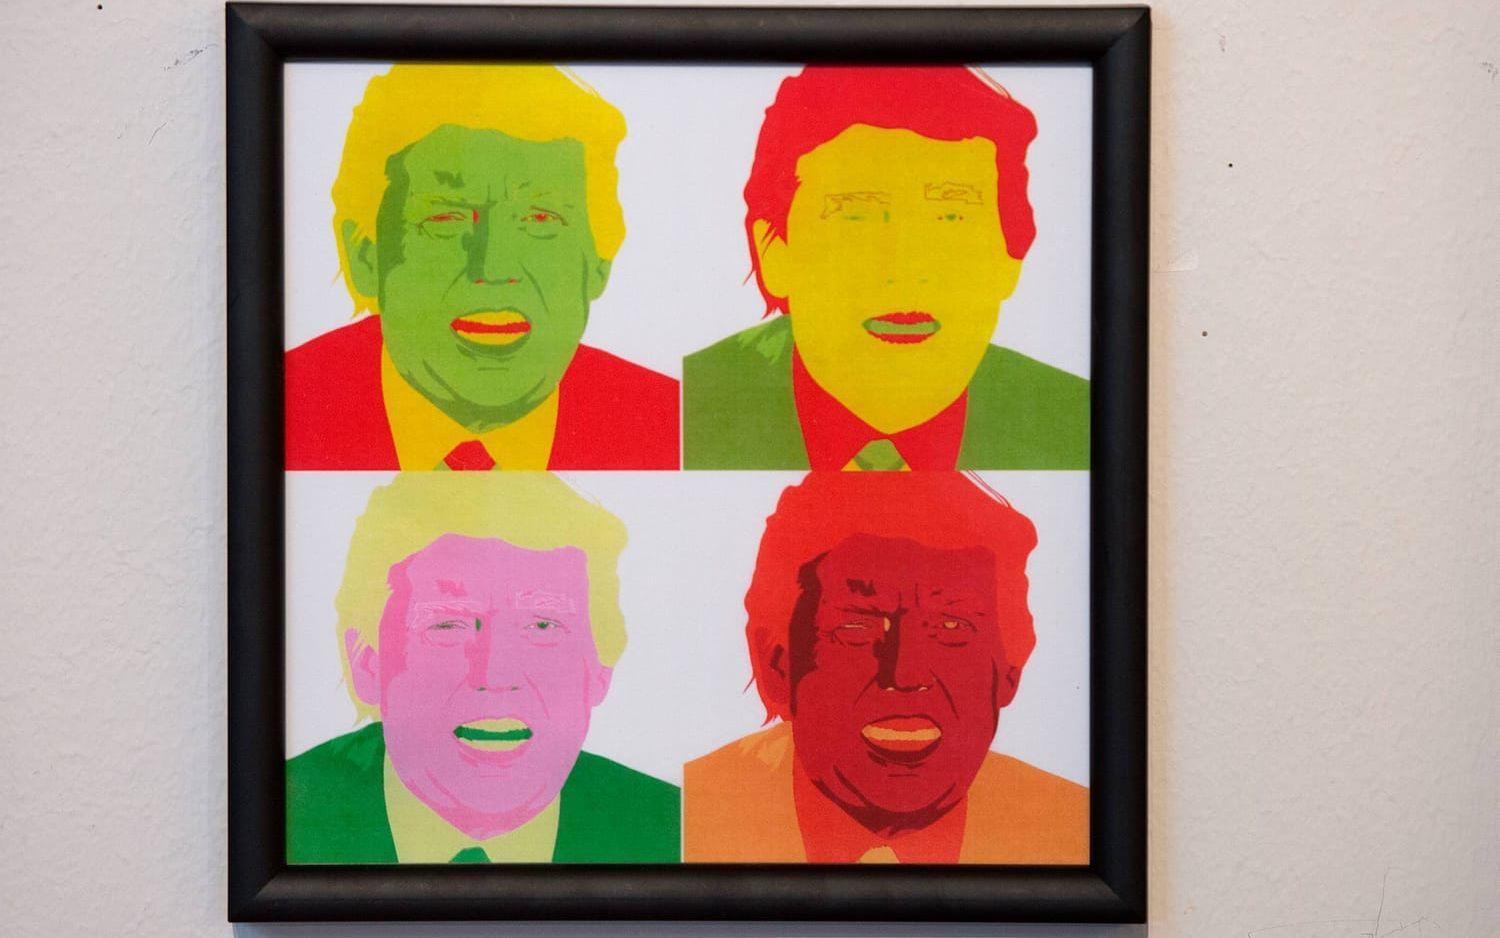 Donald Trump i konstform.